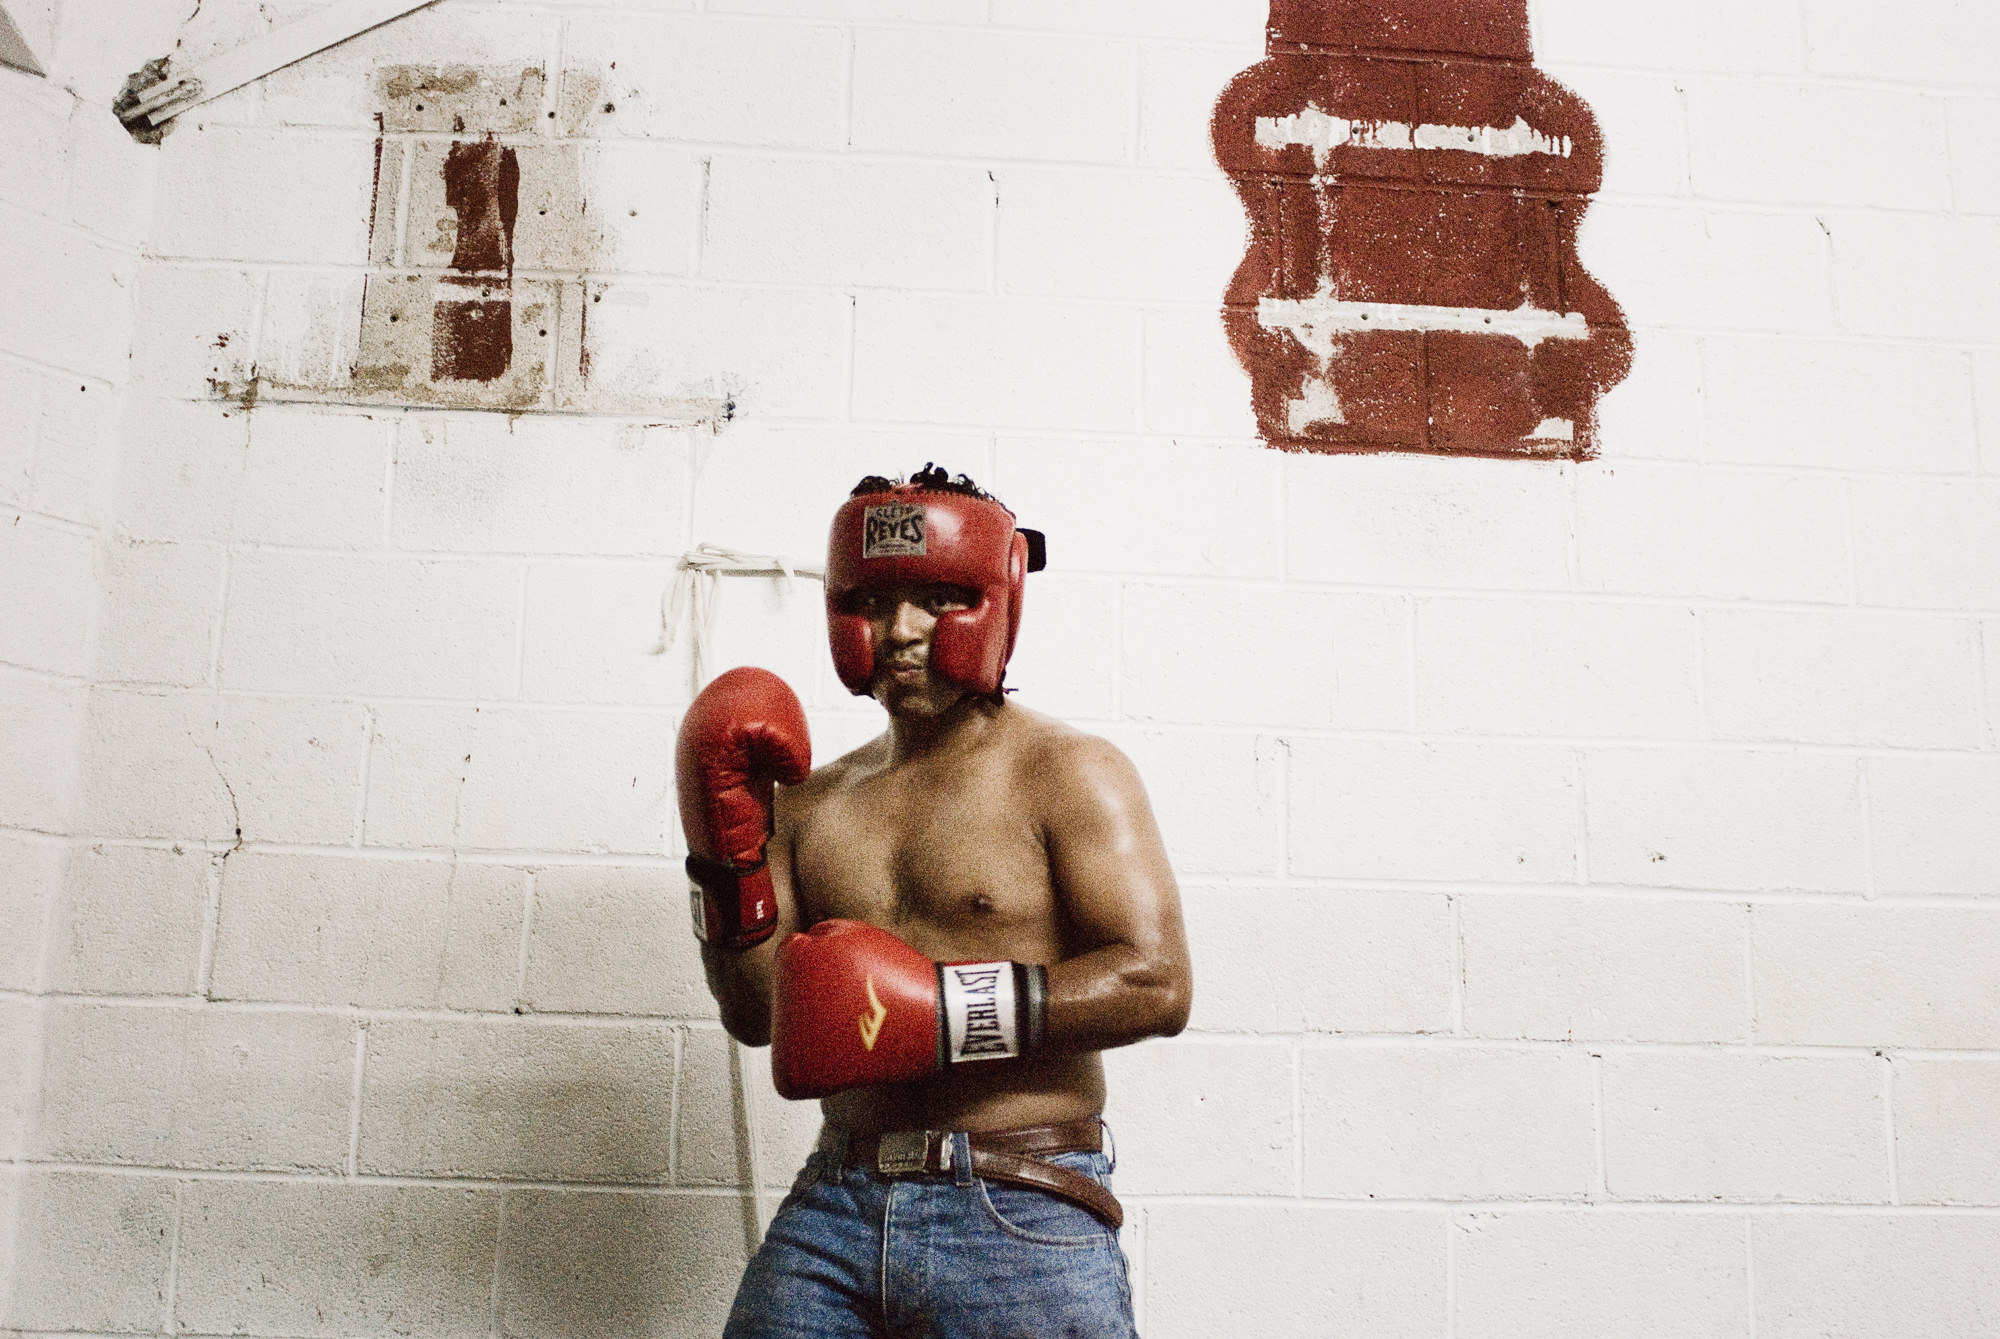 wojtek-jakubiec-photographer-montreal-boxing-mexico-documentary-boxer-warming-up.jpg